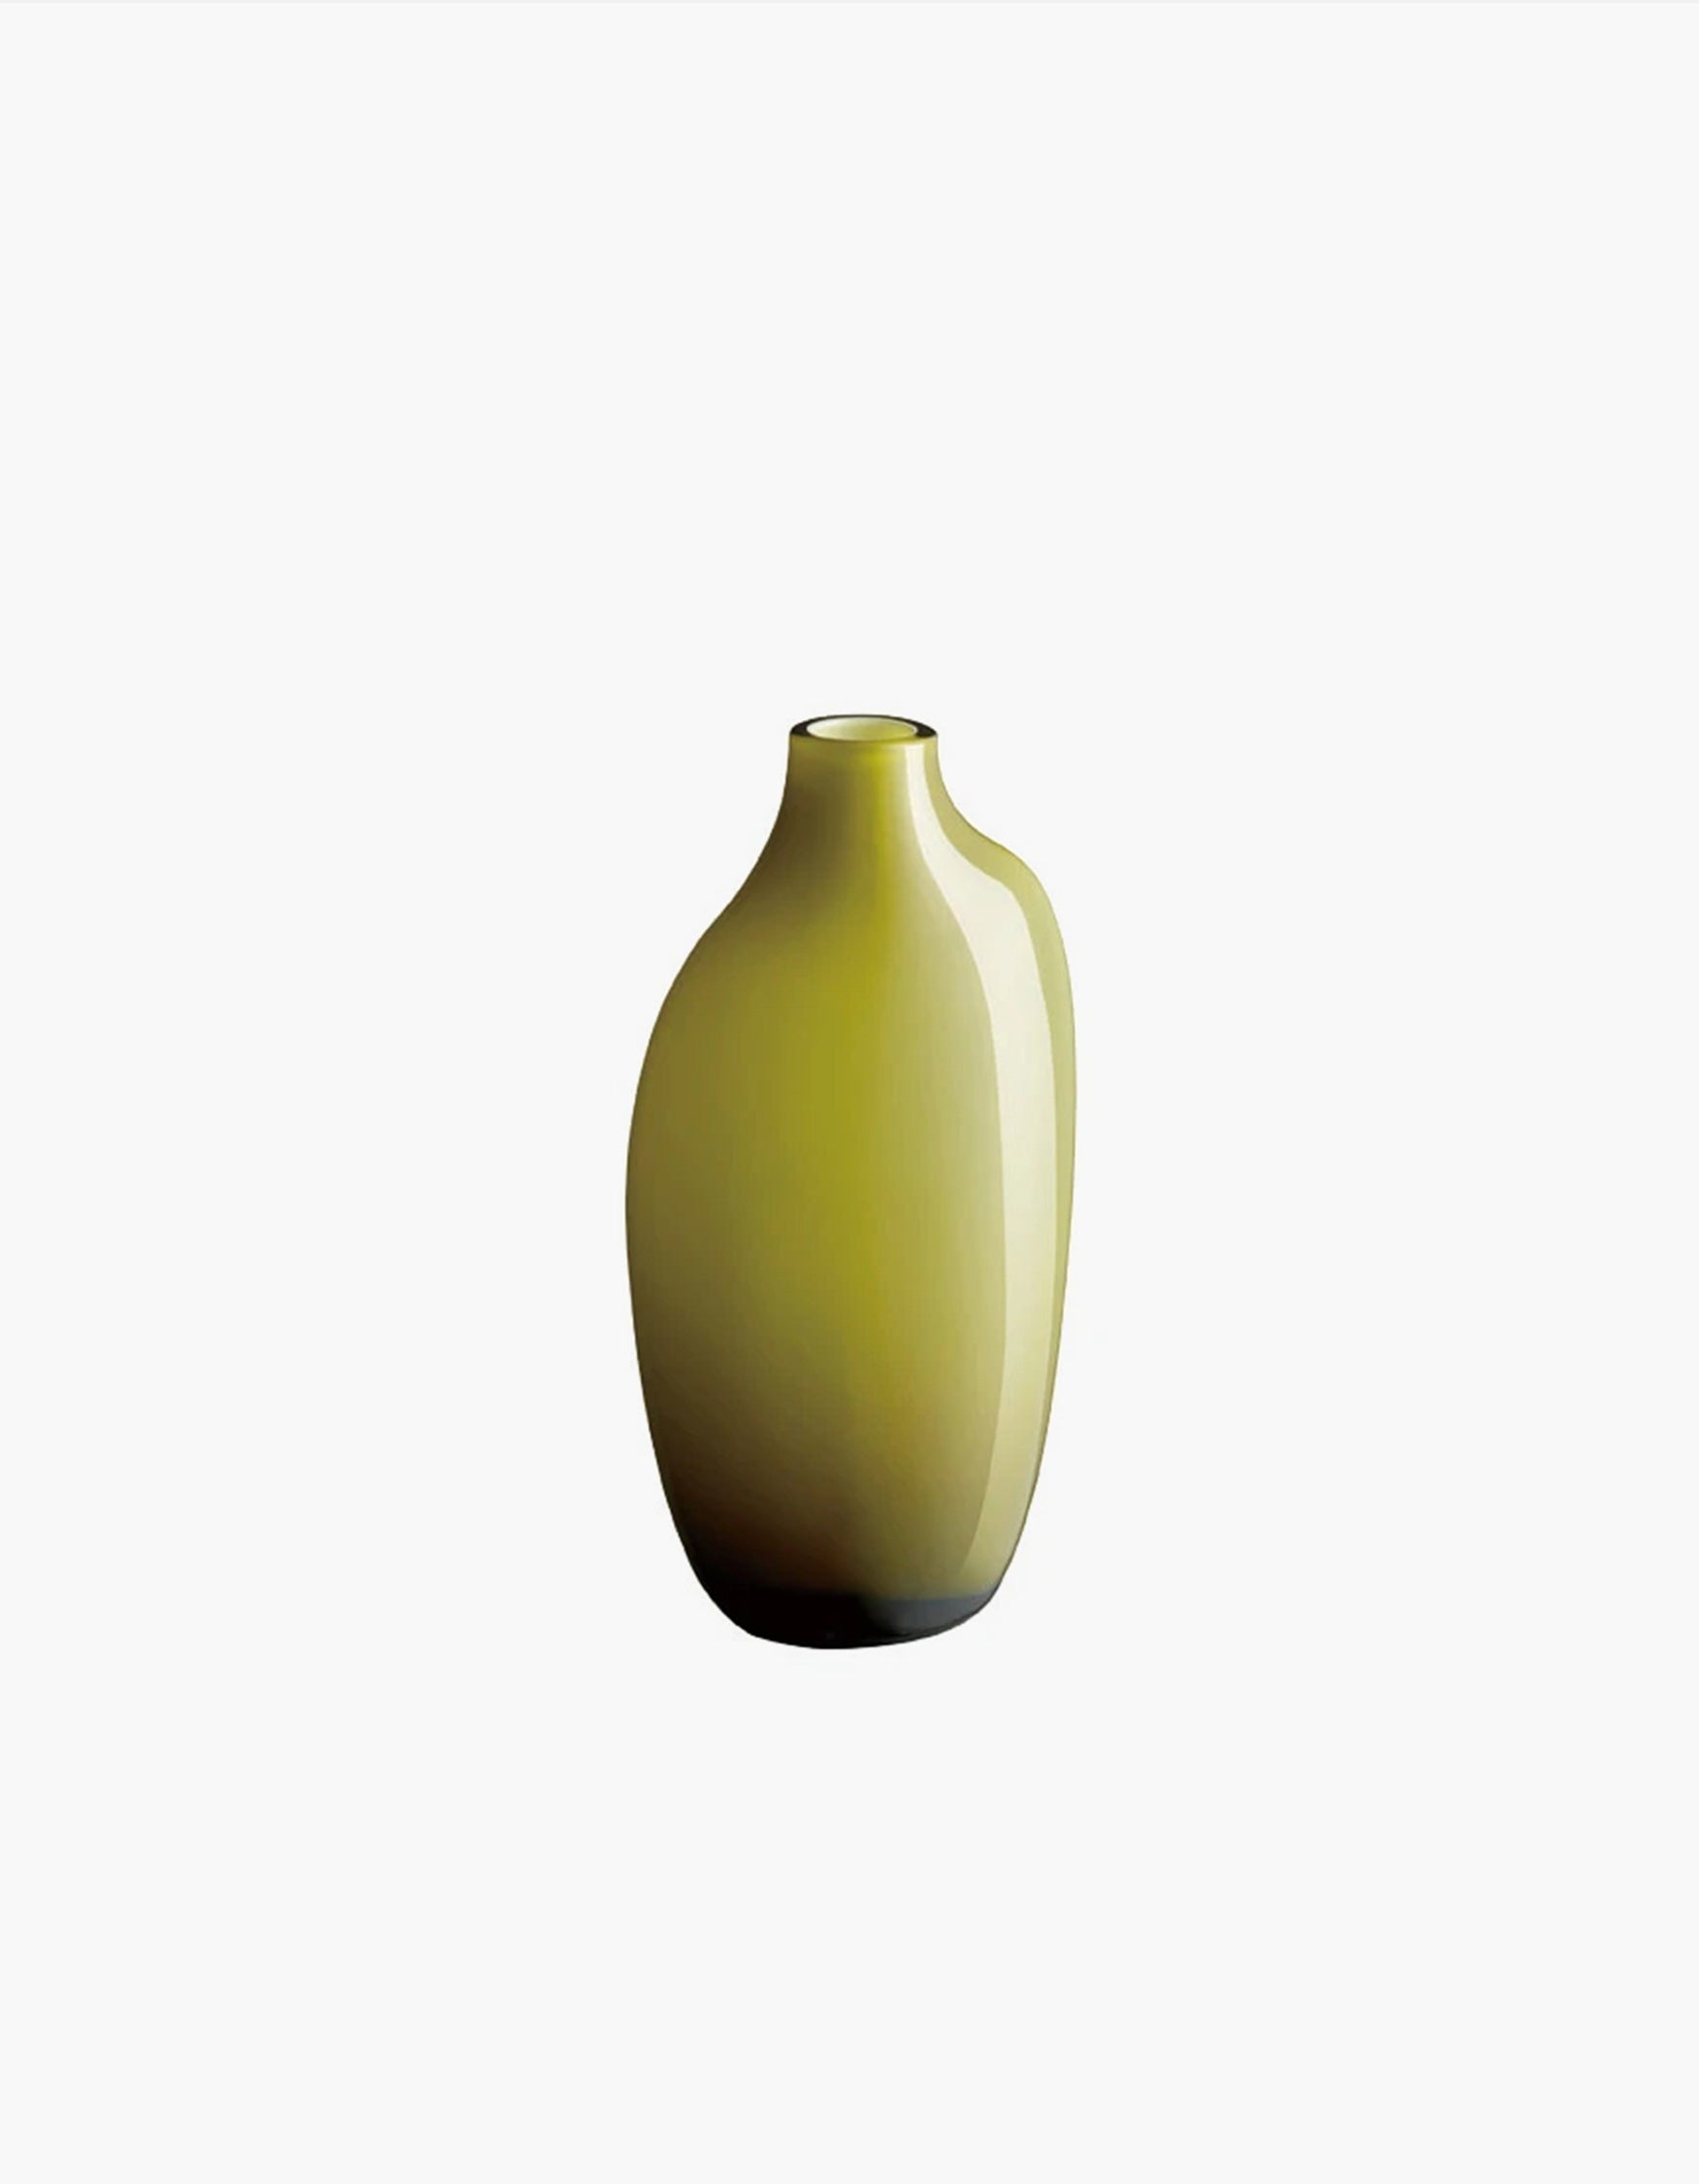 Sacco Vase No. 3 Photo